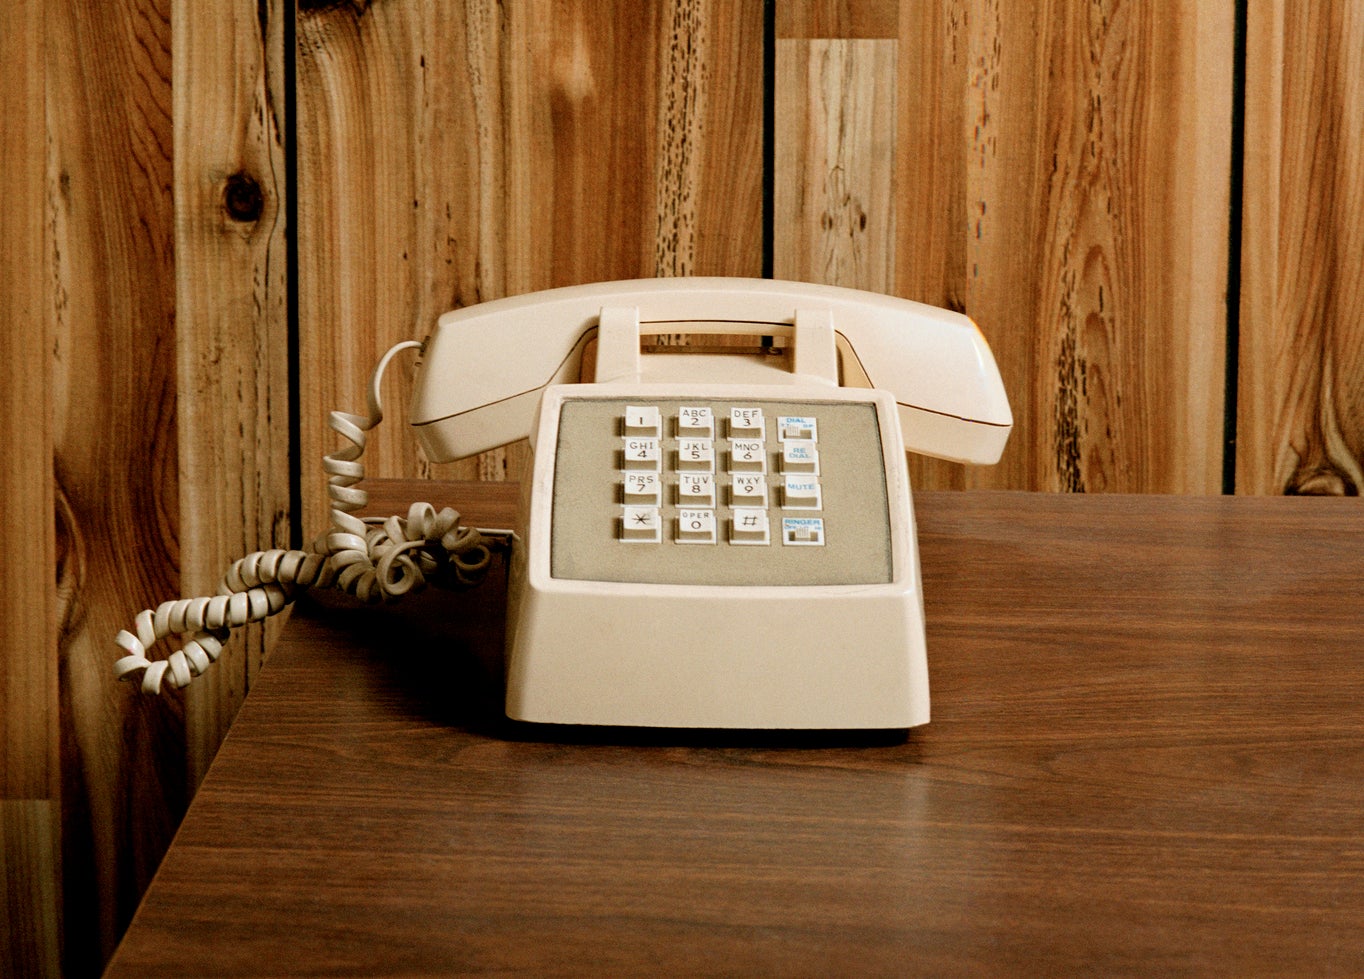 A landline telephone